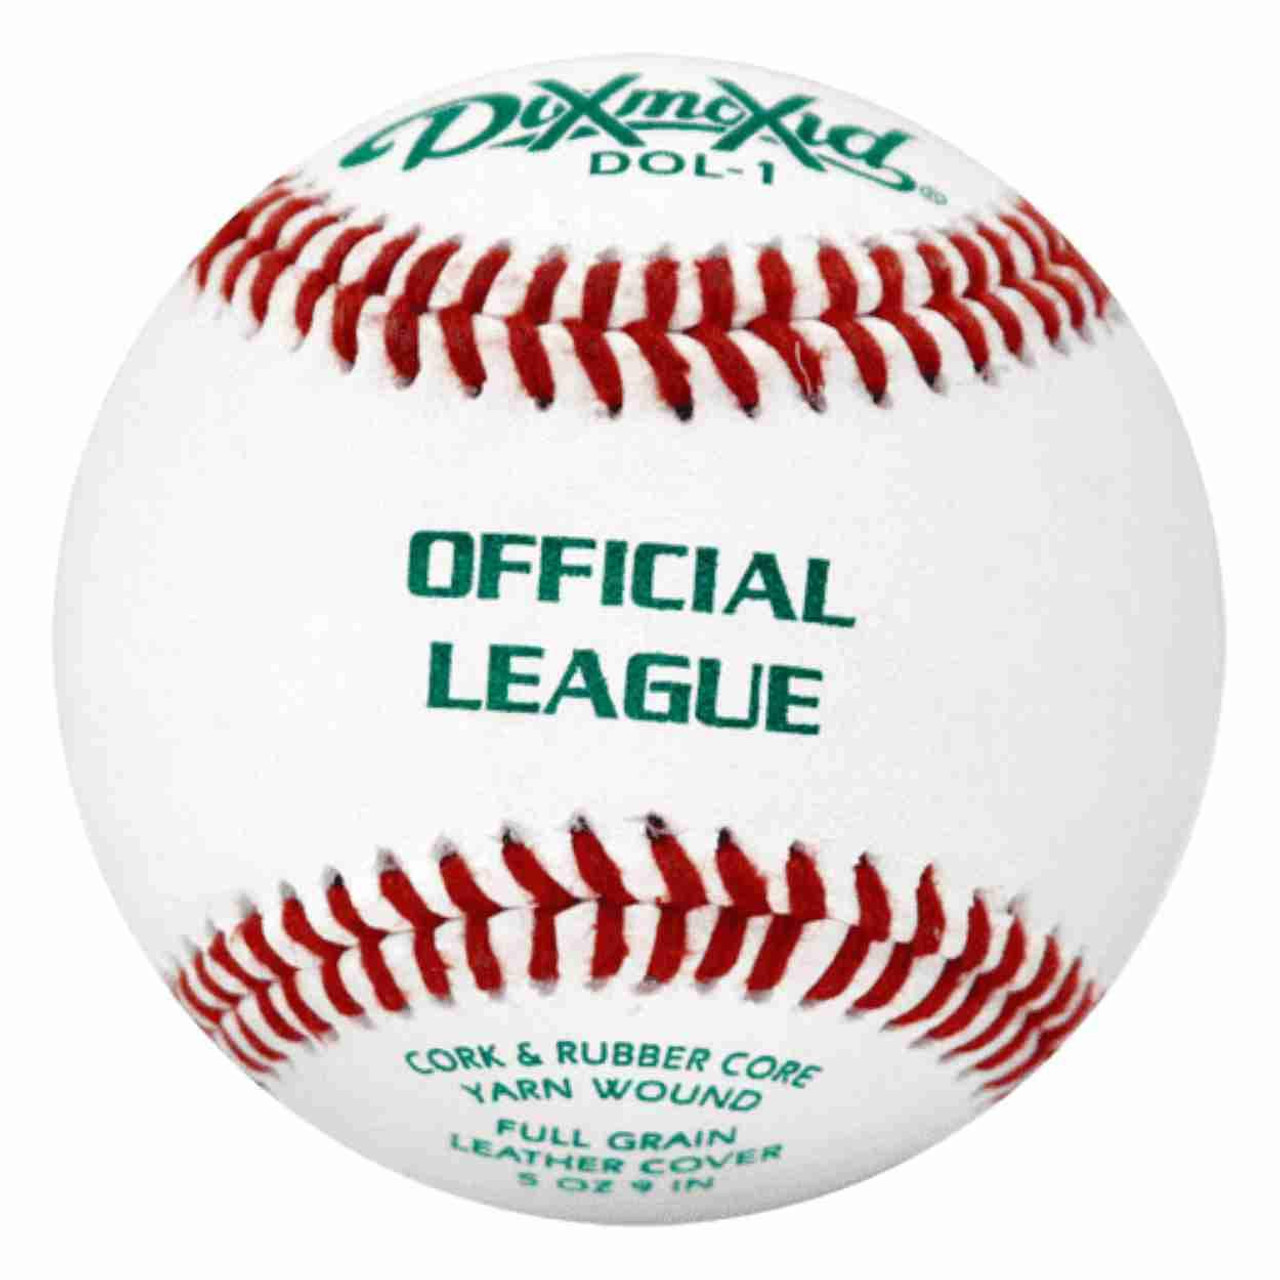 Diamond DOL-1 USSSA Baseball Dozen-36 Balls Official Game and Practice Baseballs 